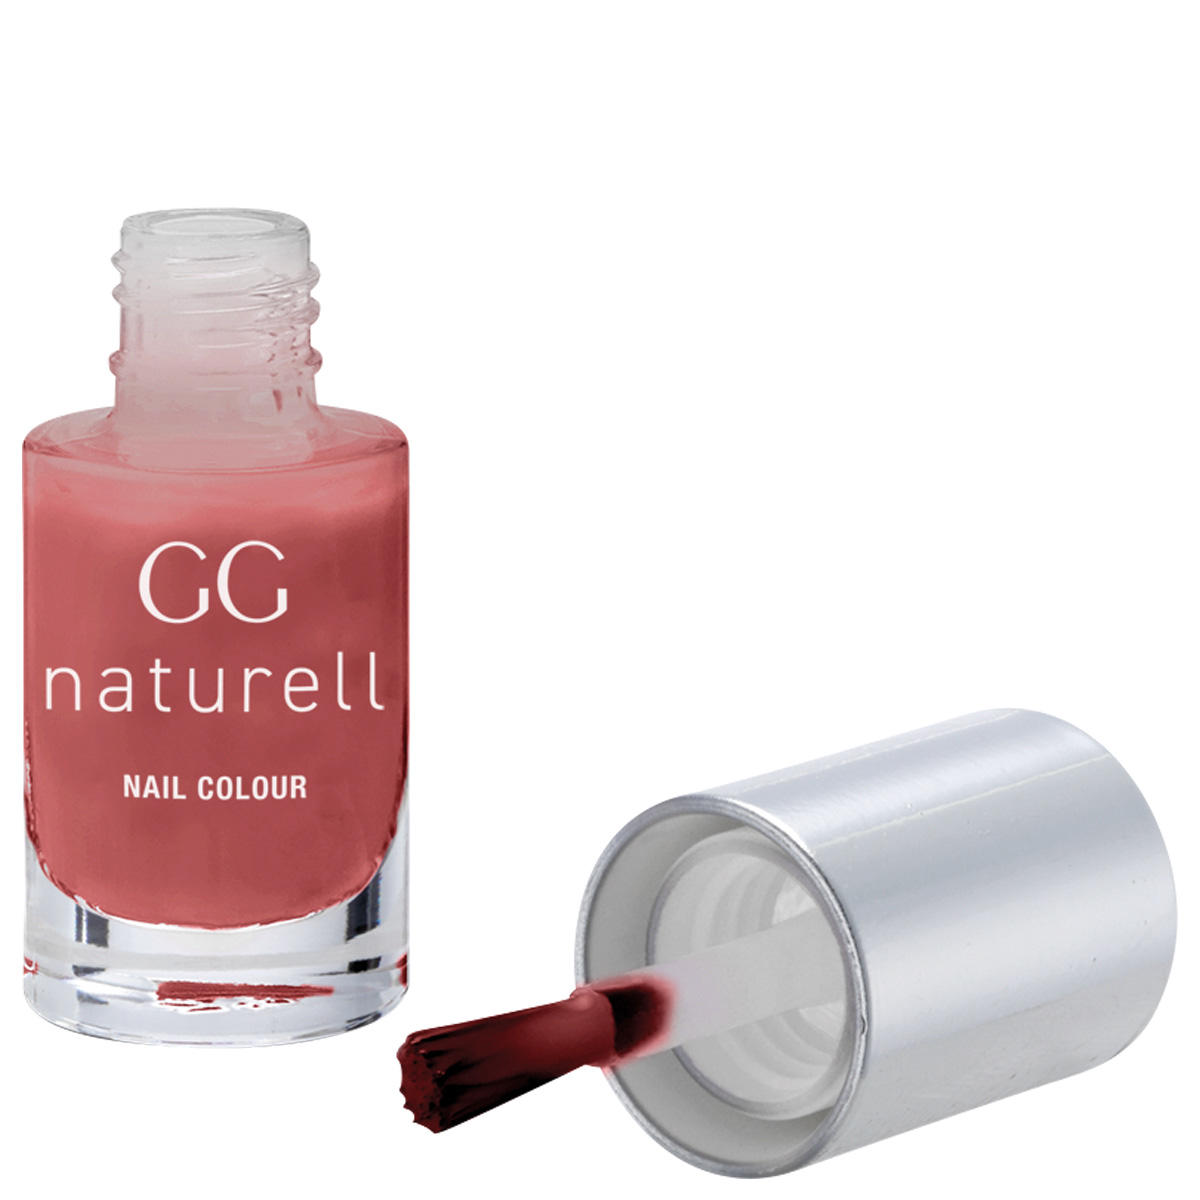 GERTRAUD GRUBER GG naturell Nail Colour 5 ml Mogano